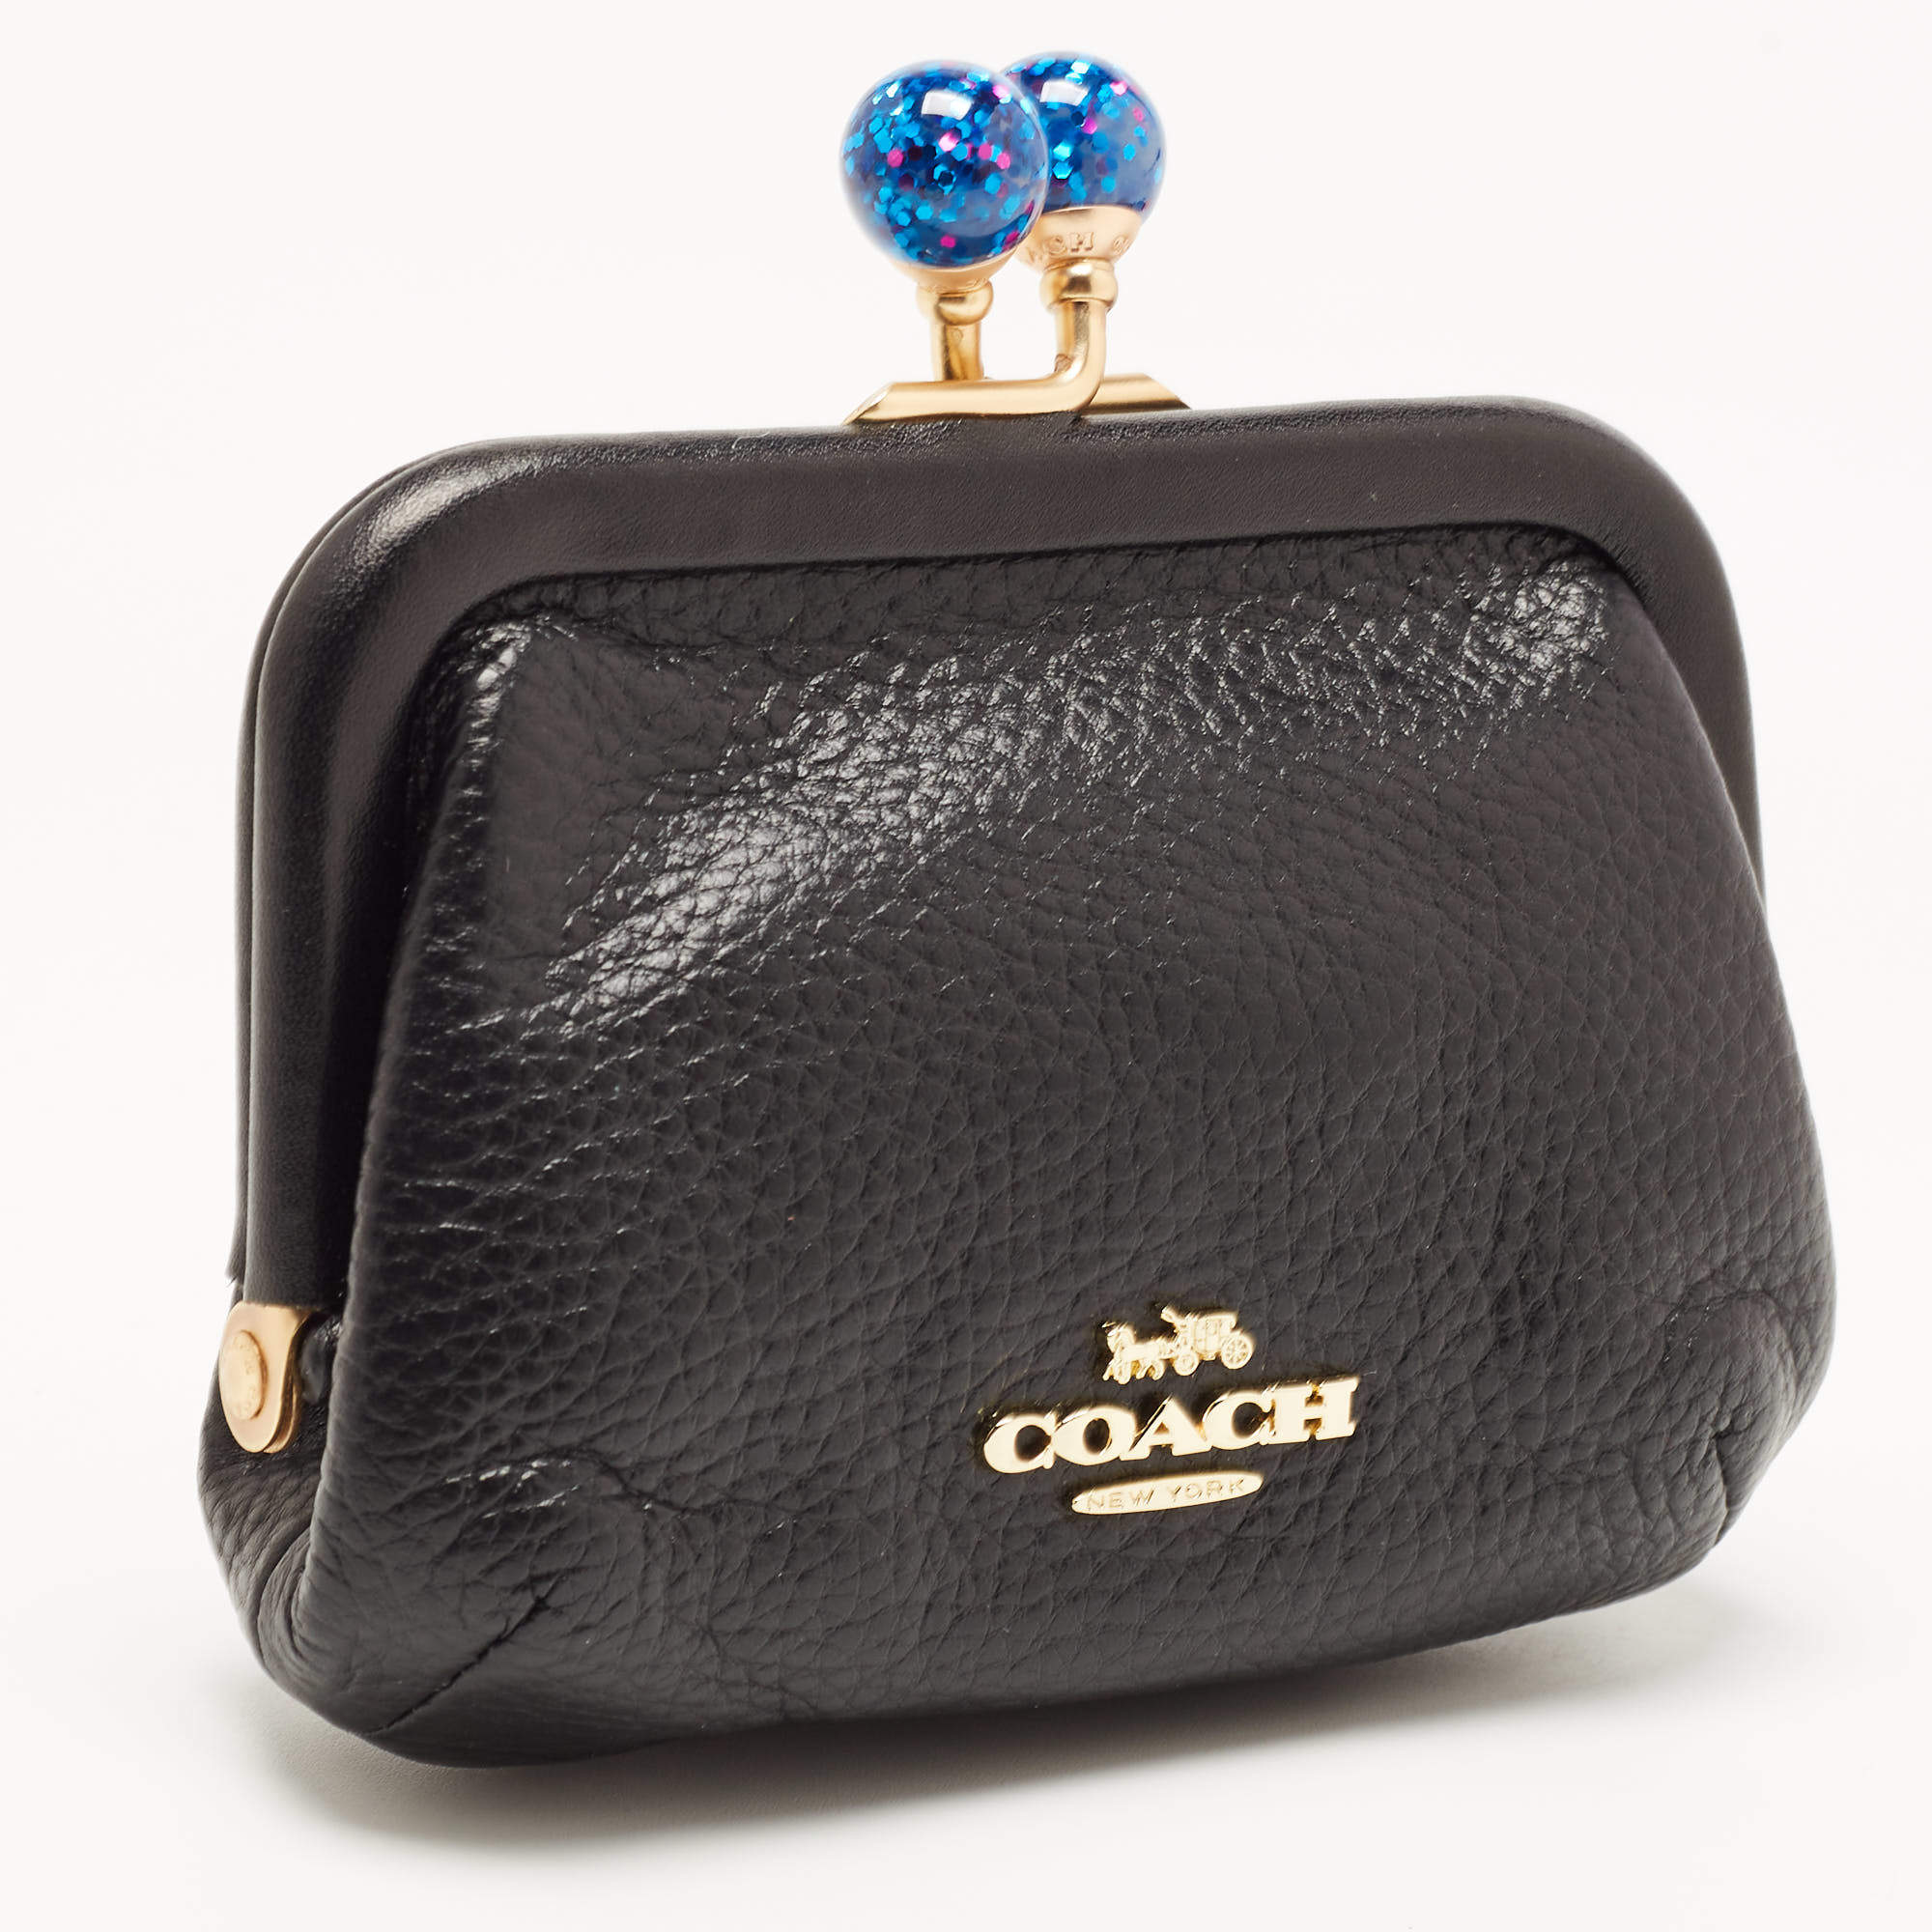 COACH Medium Leather Corner Zip Wallet in Black - Gold, Style No. 6390,  Gold/Black, Medium Leather Corner Zip Wallet : Amazon.co.uk: Fashion